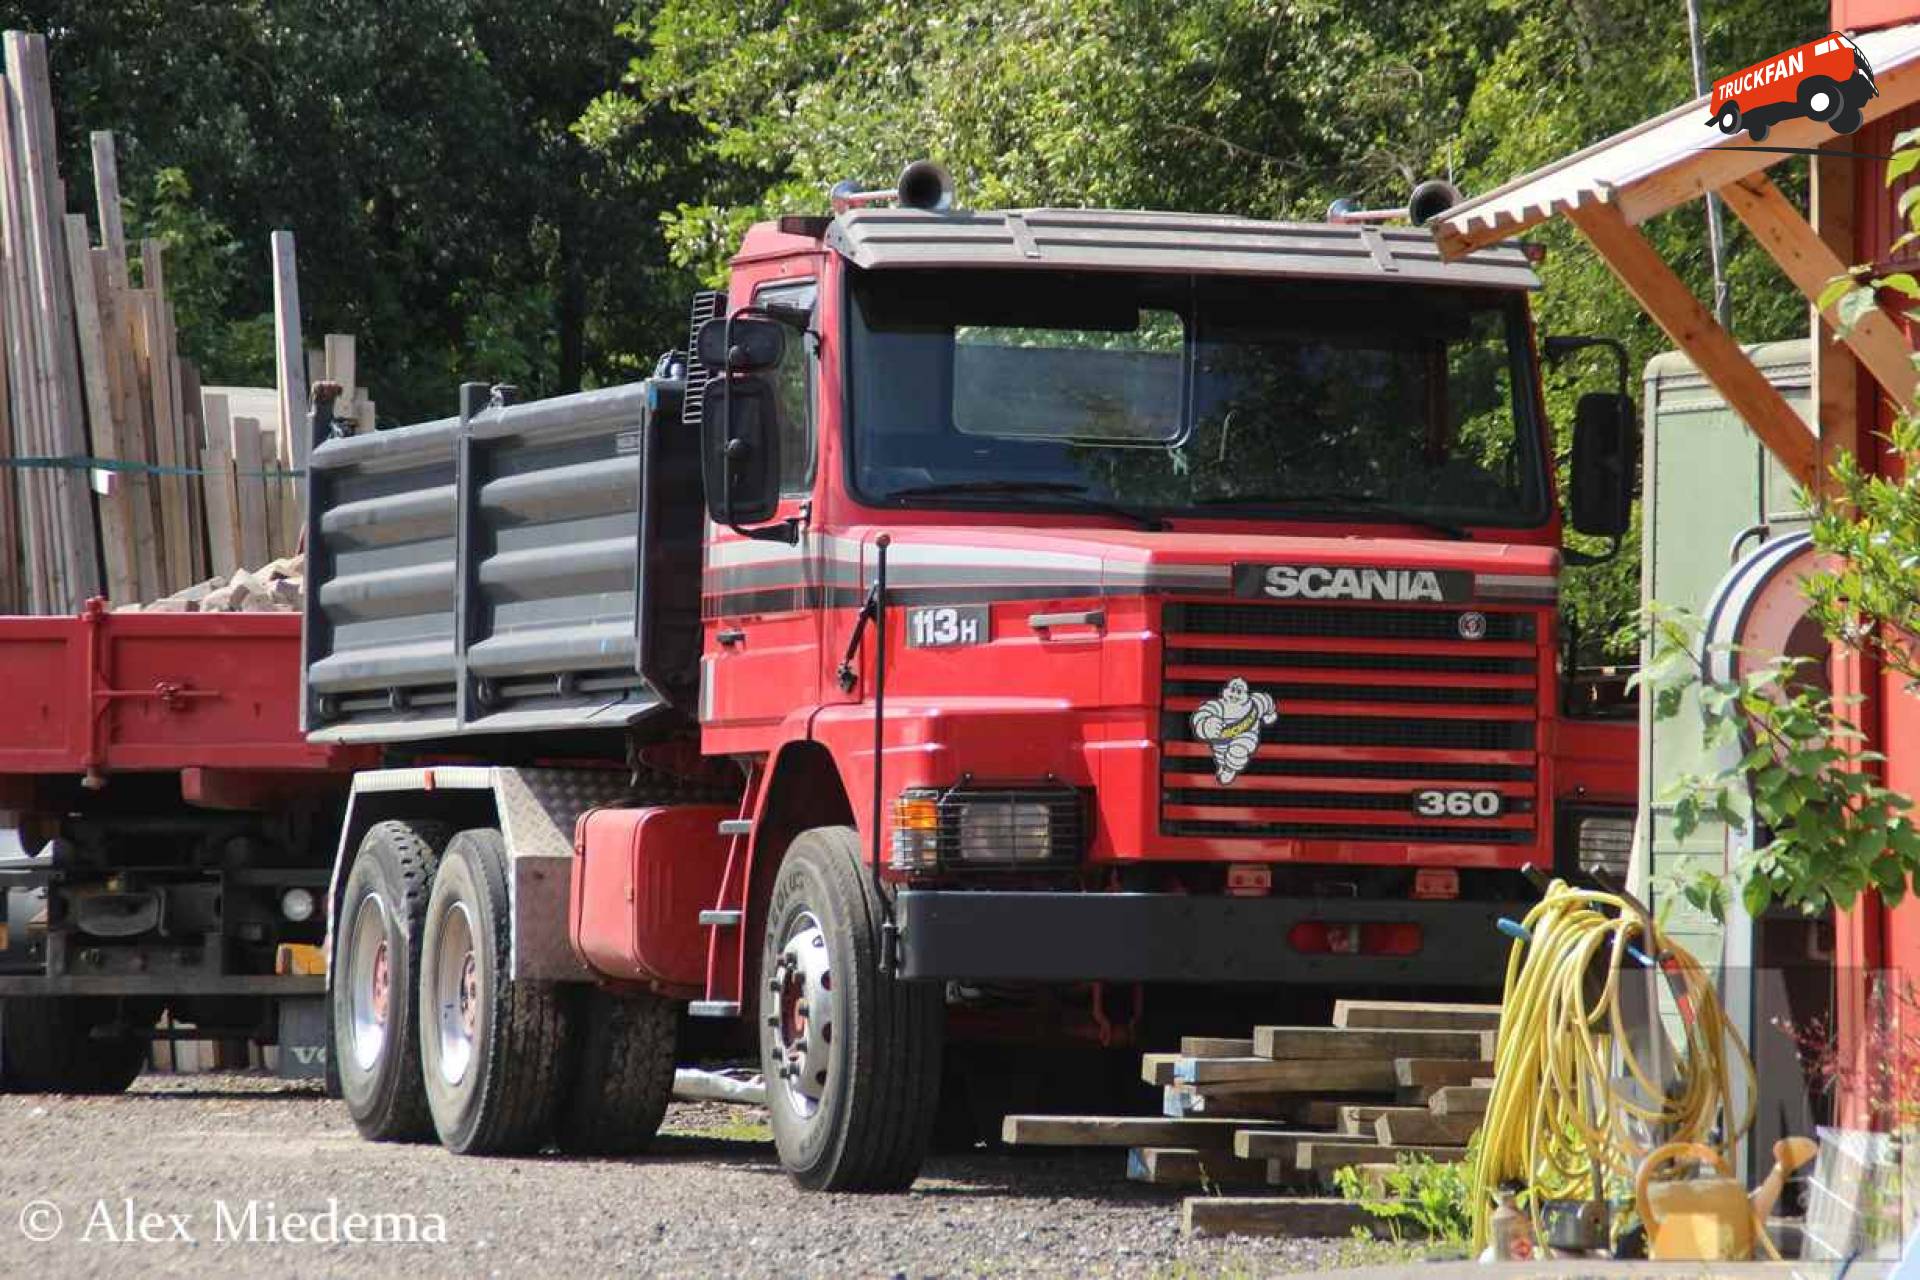 Scania T113